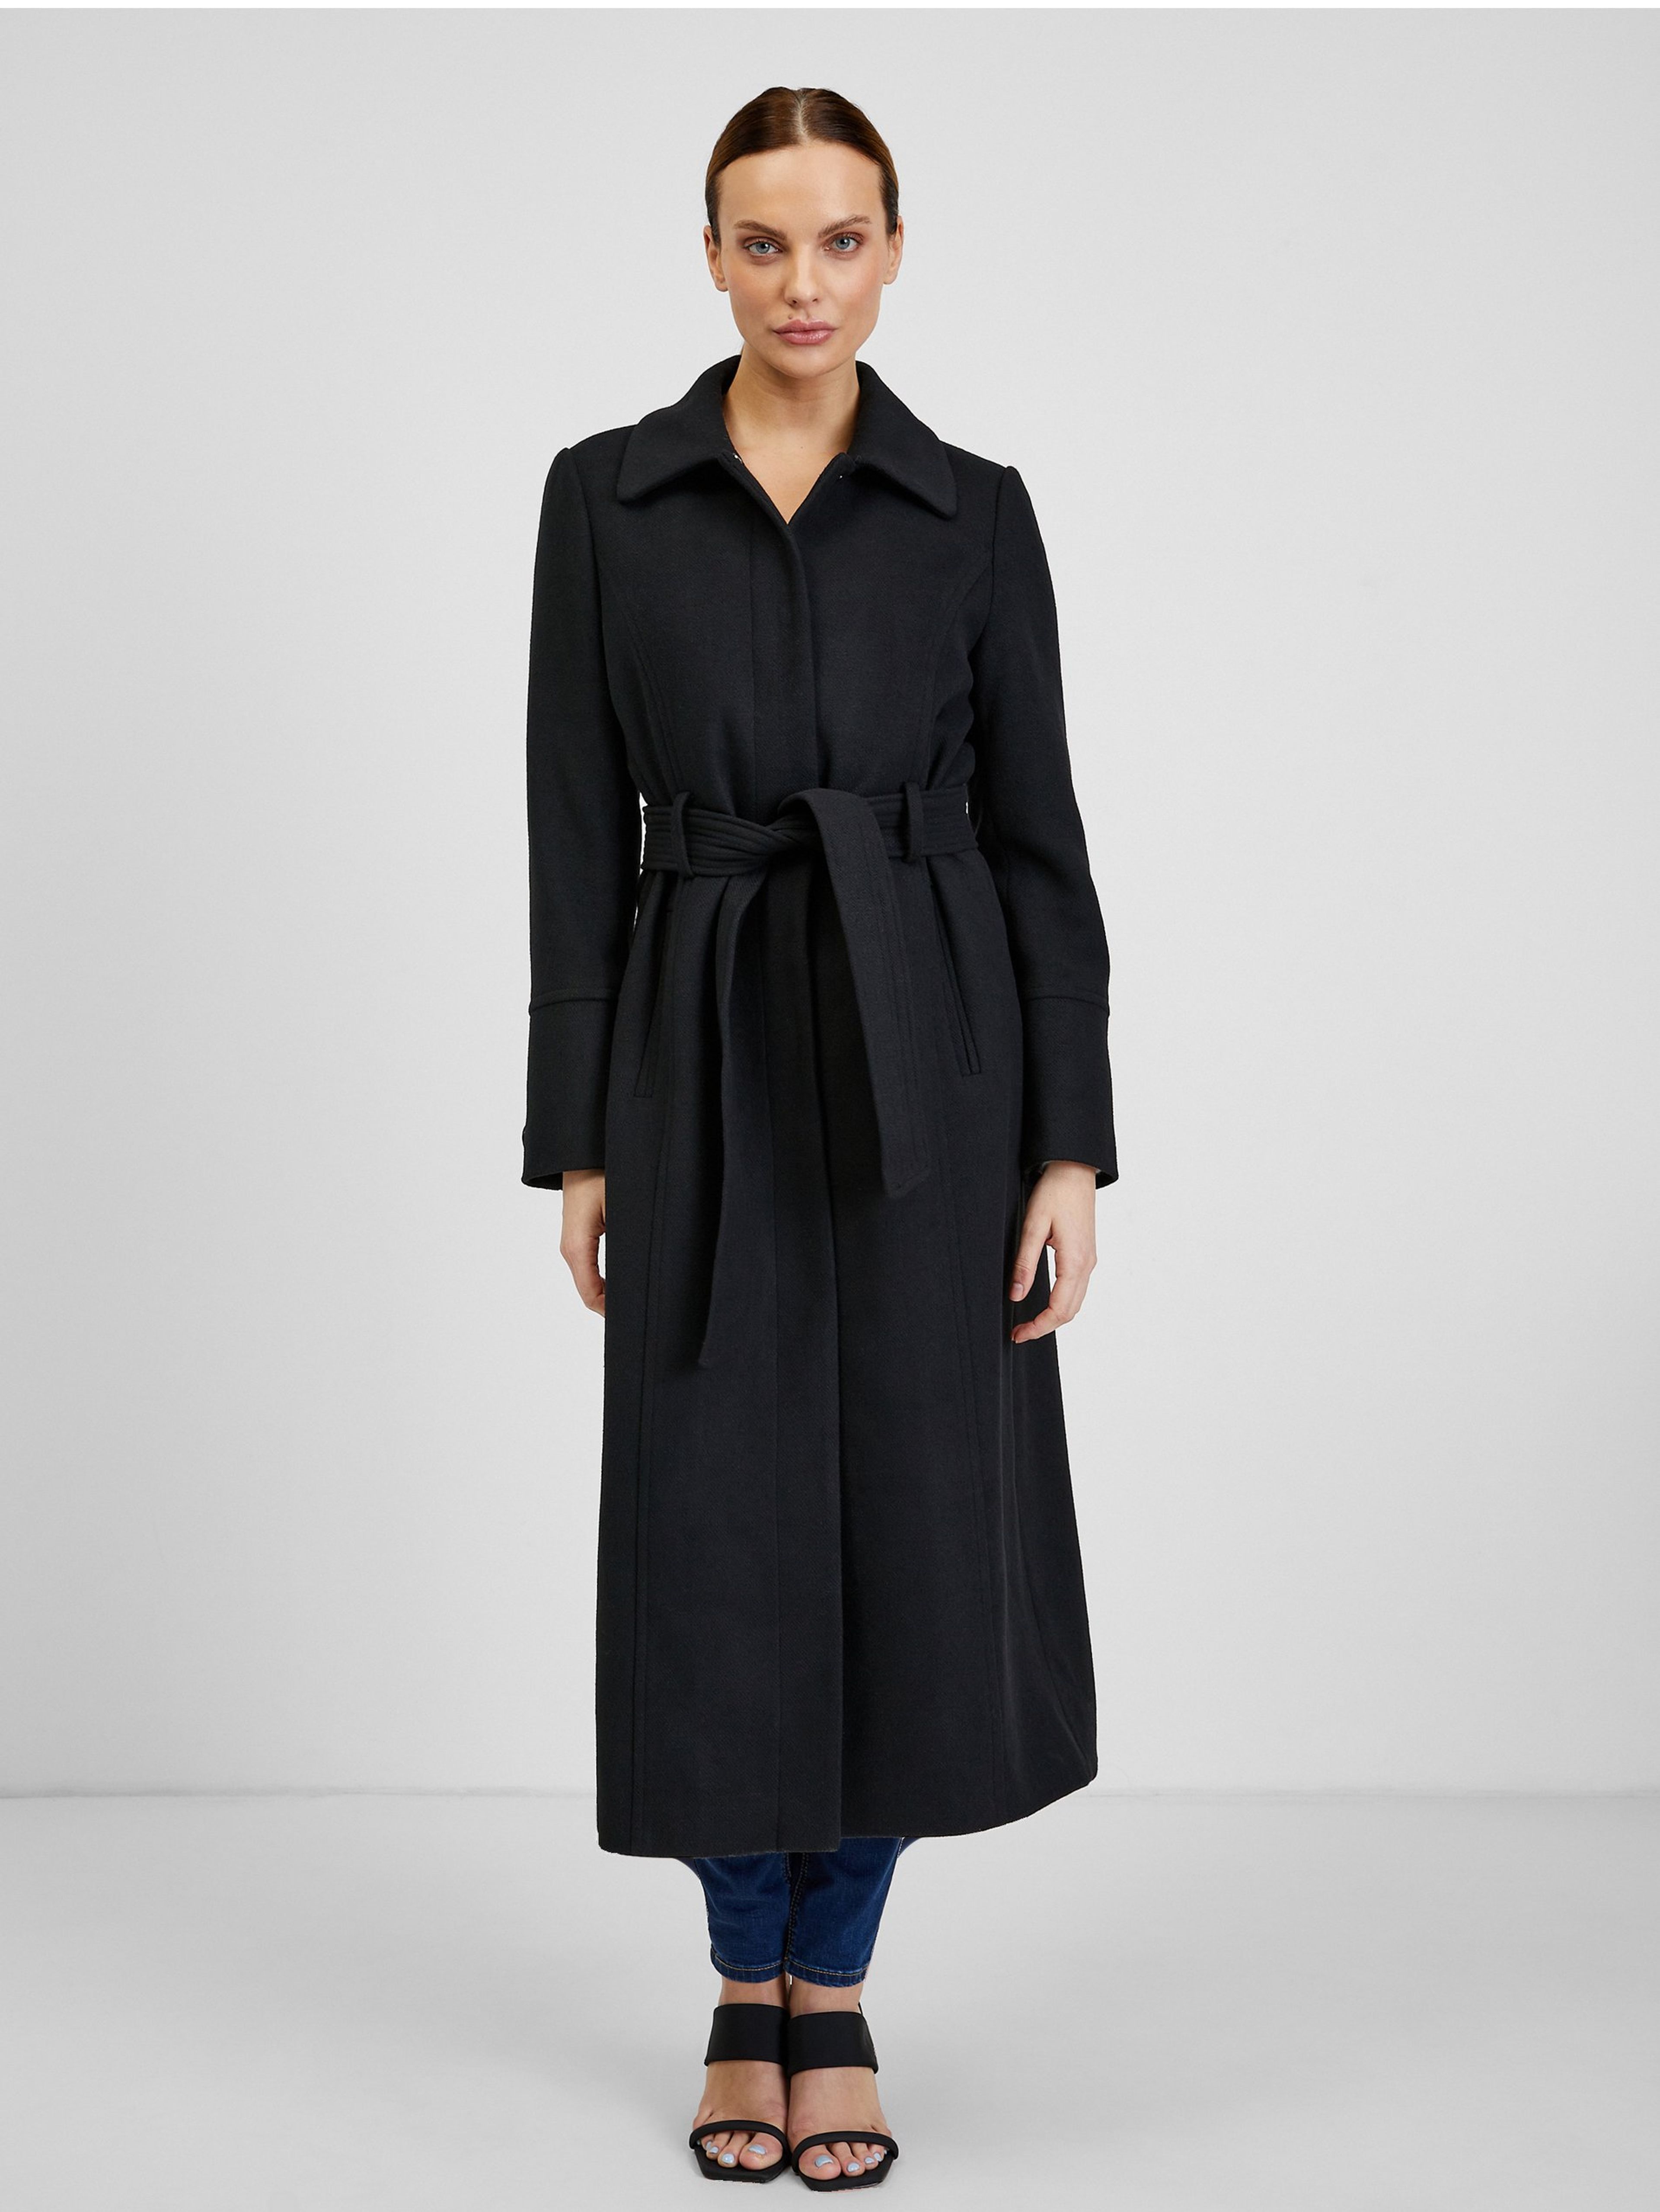 Čierny dámsky zimný kabát s vlnou ORSAY